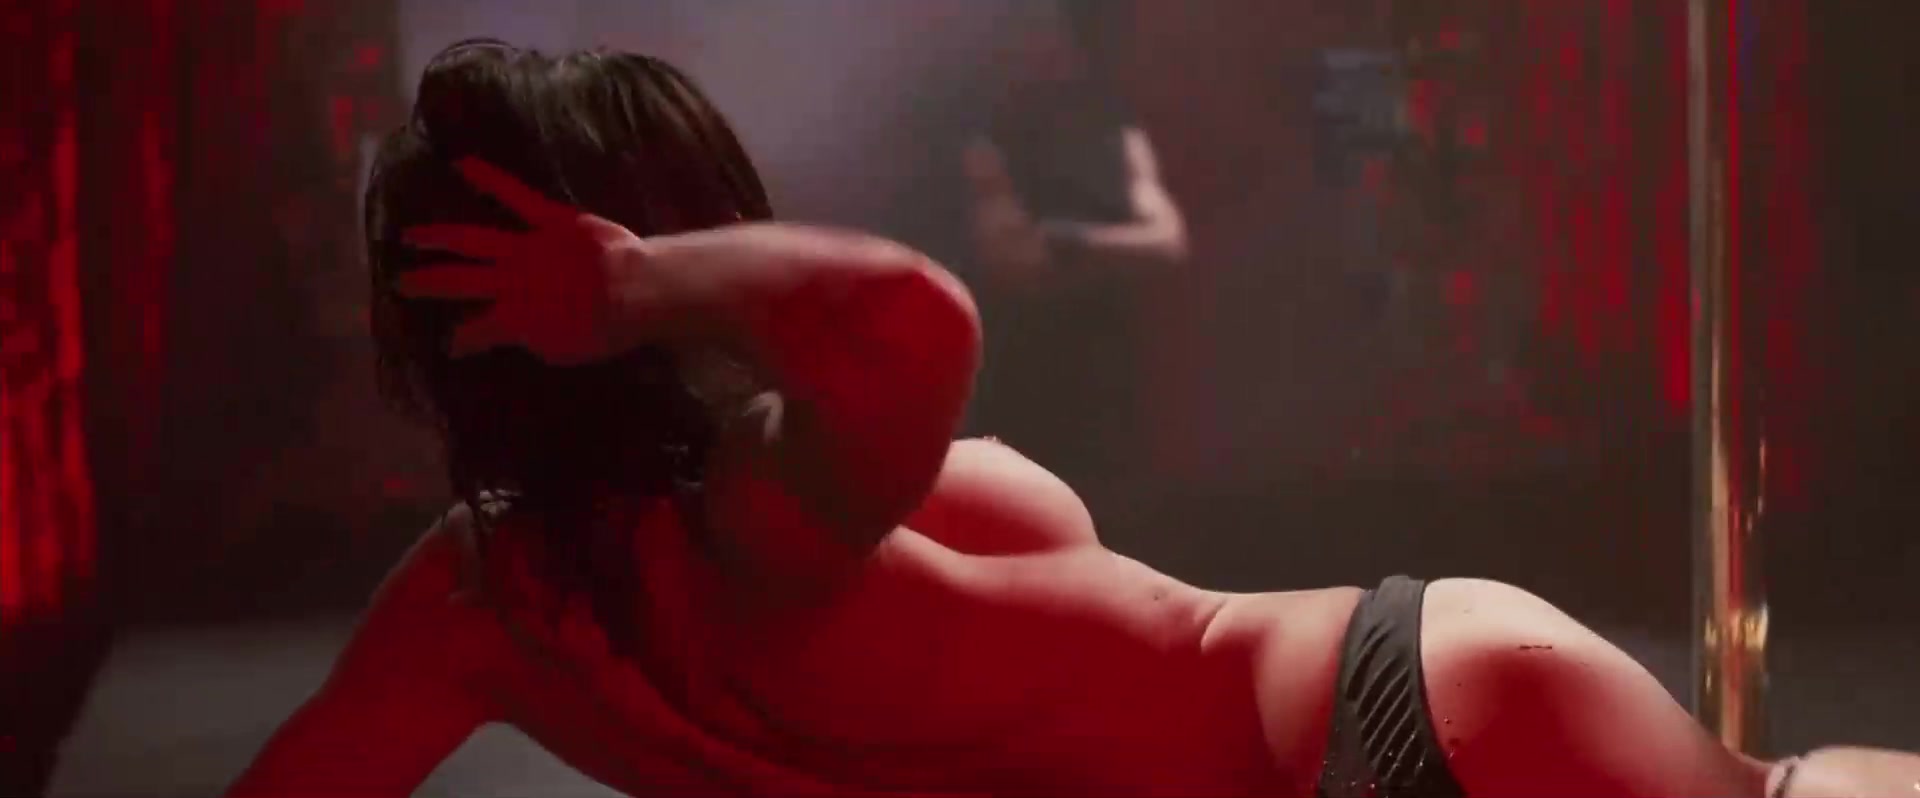 Jessica biel topless sex scene domination porn pics